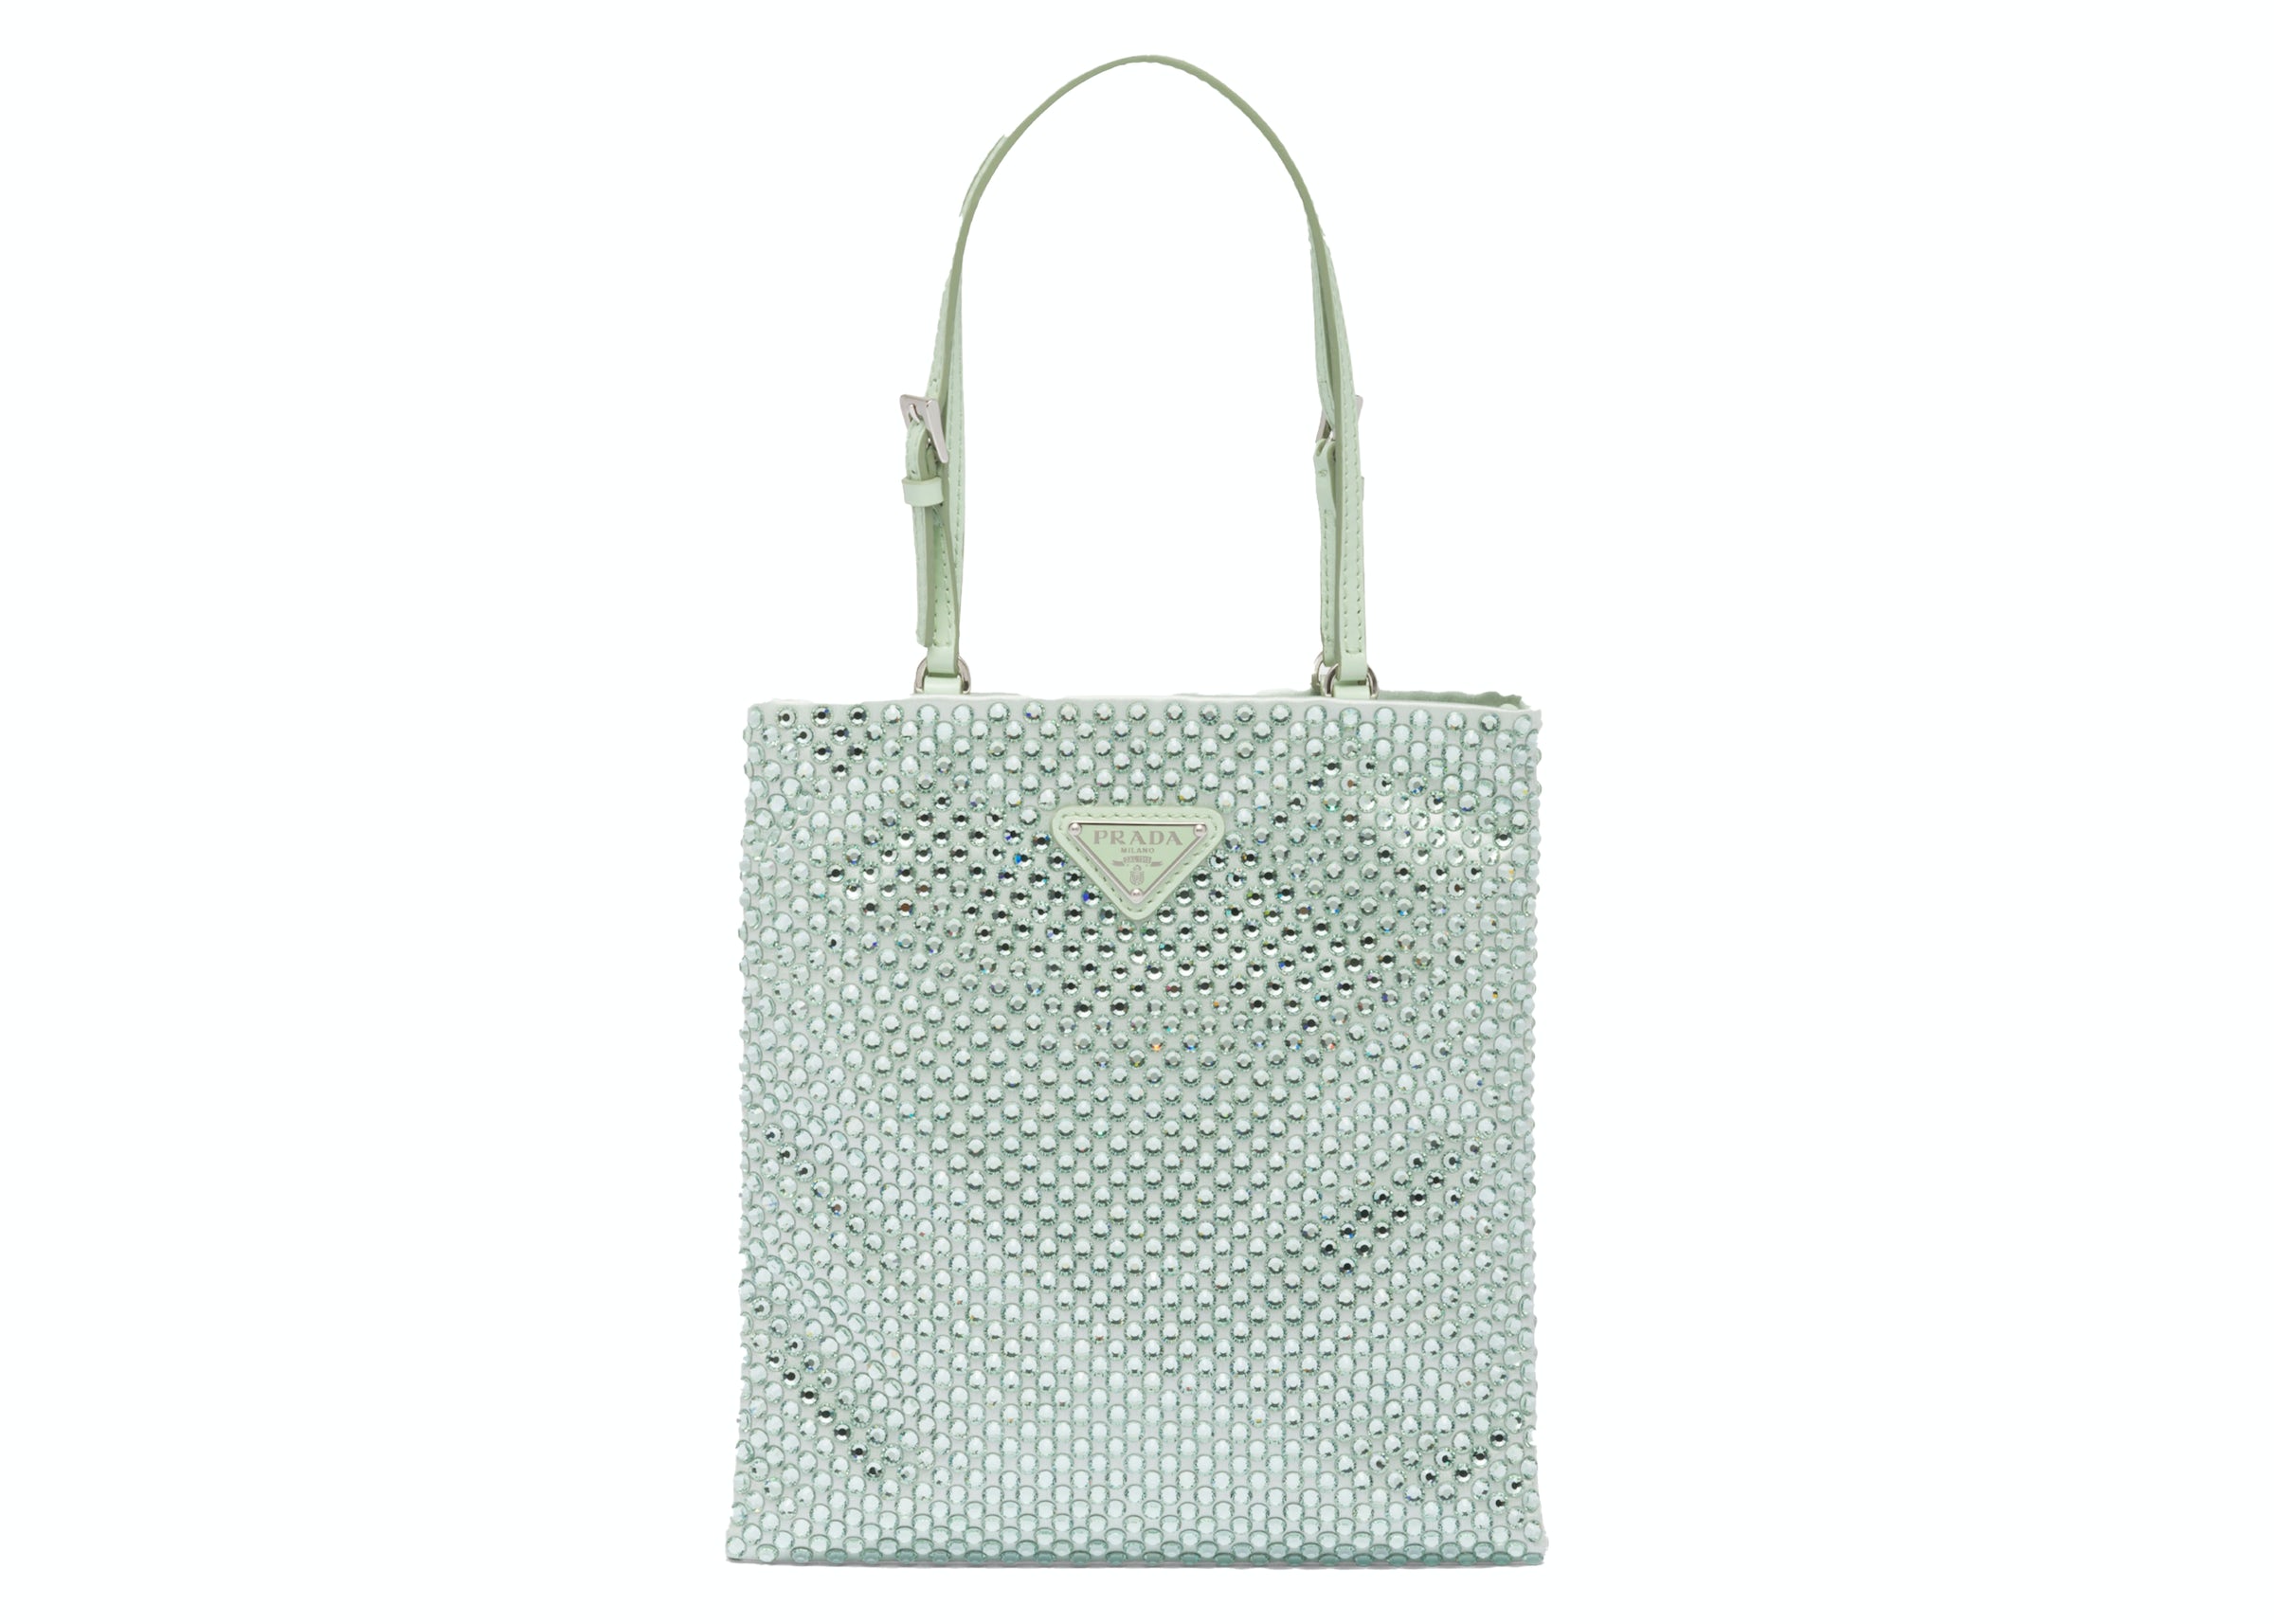 Embellished Handbags